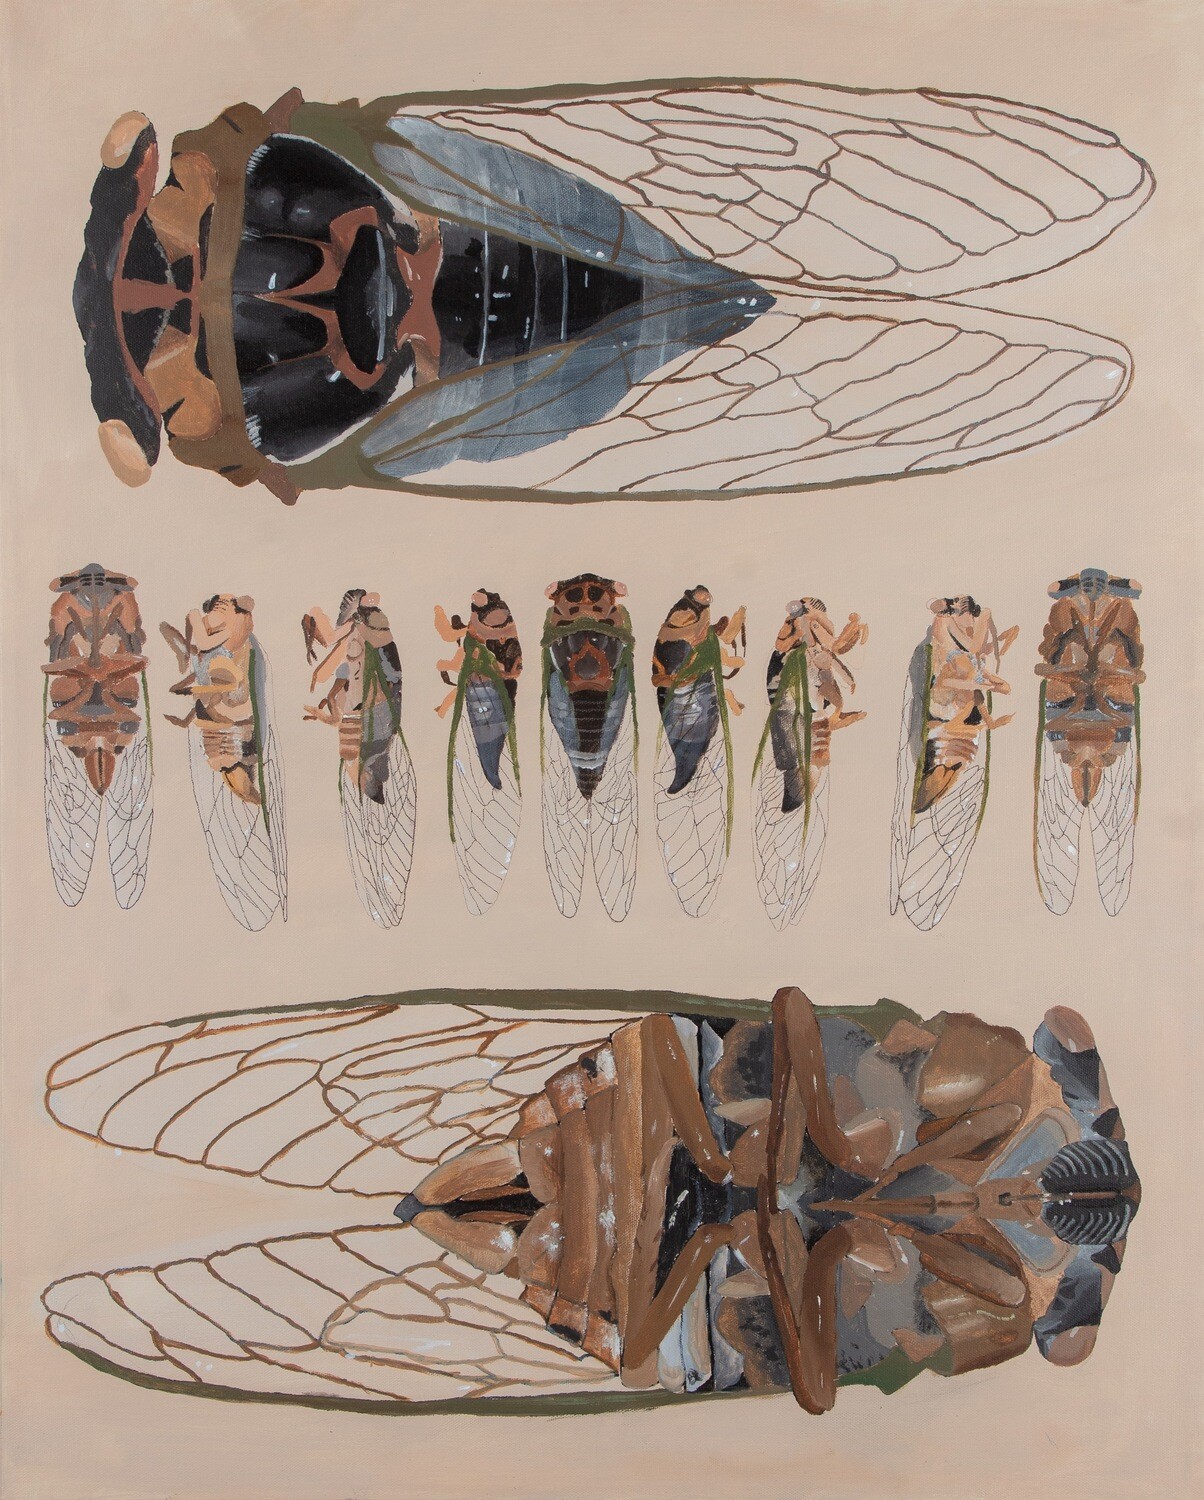 Cicada Print